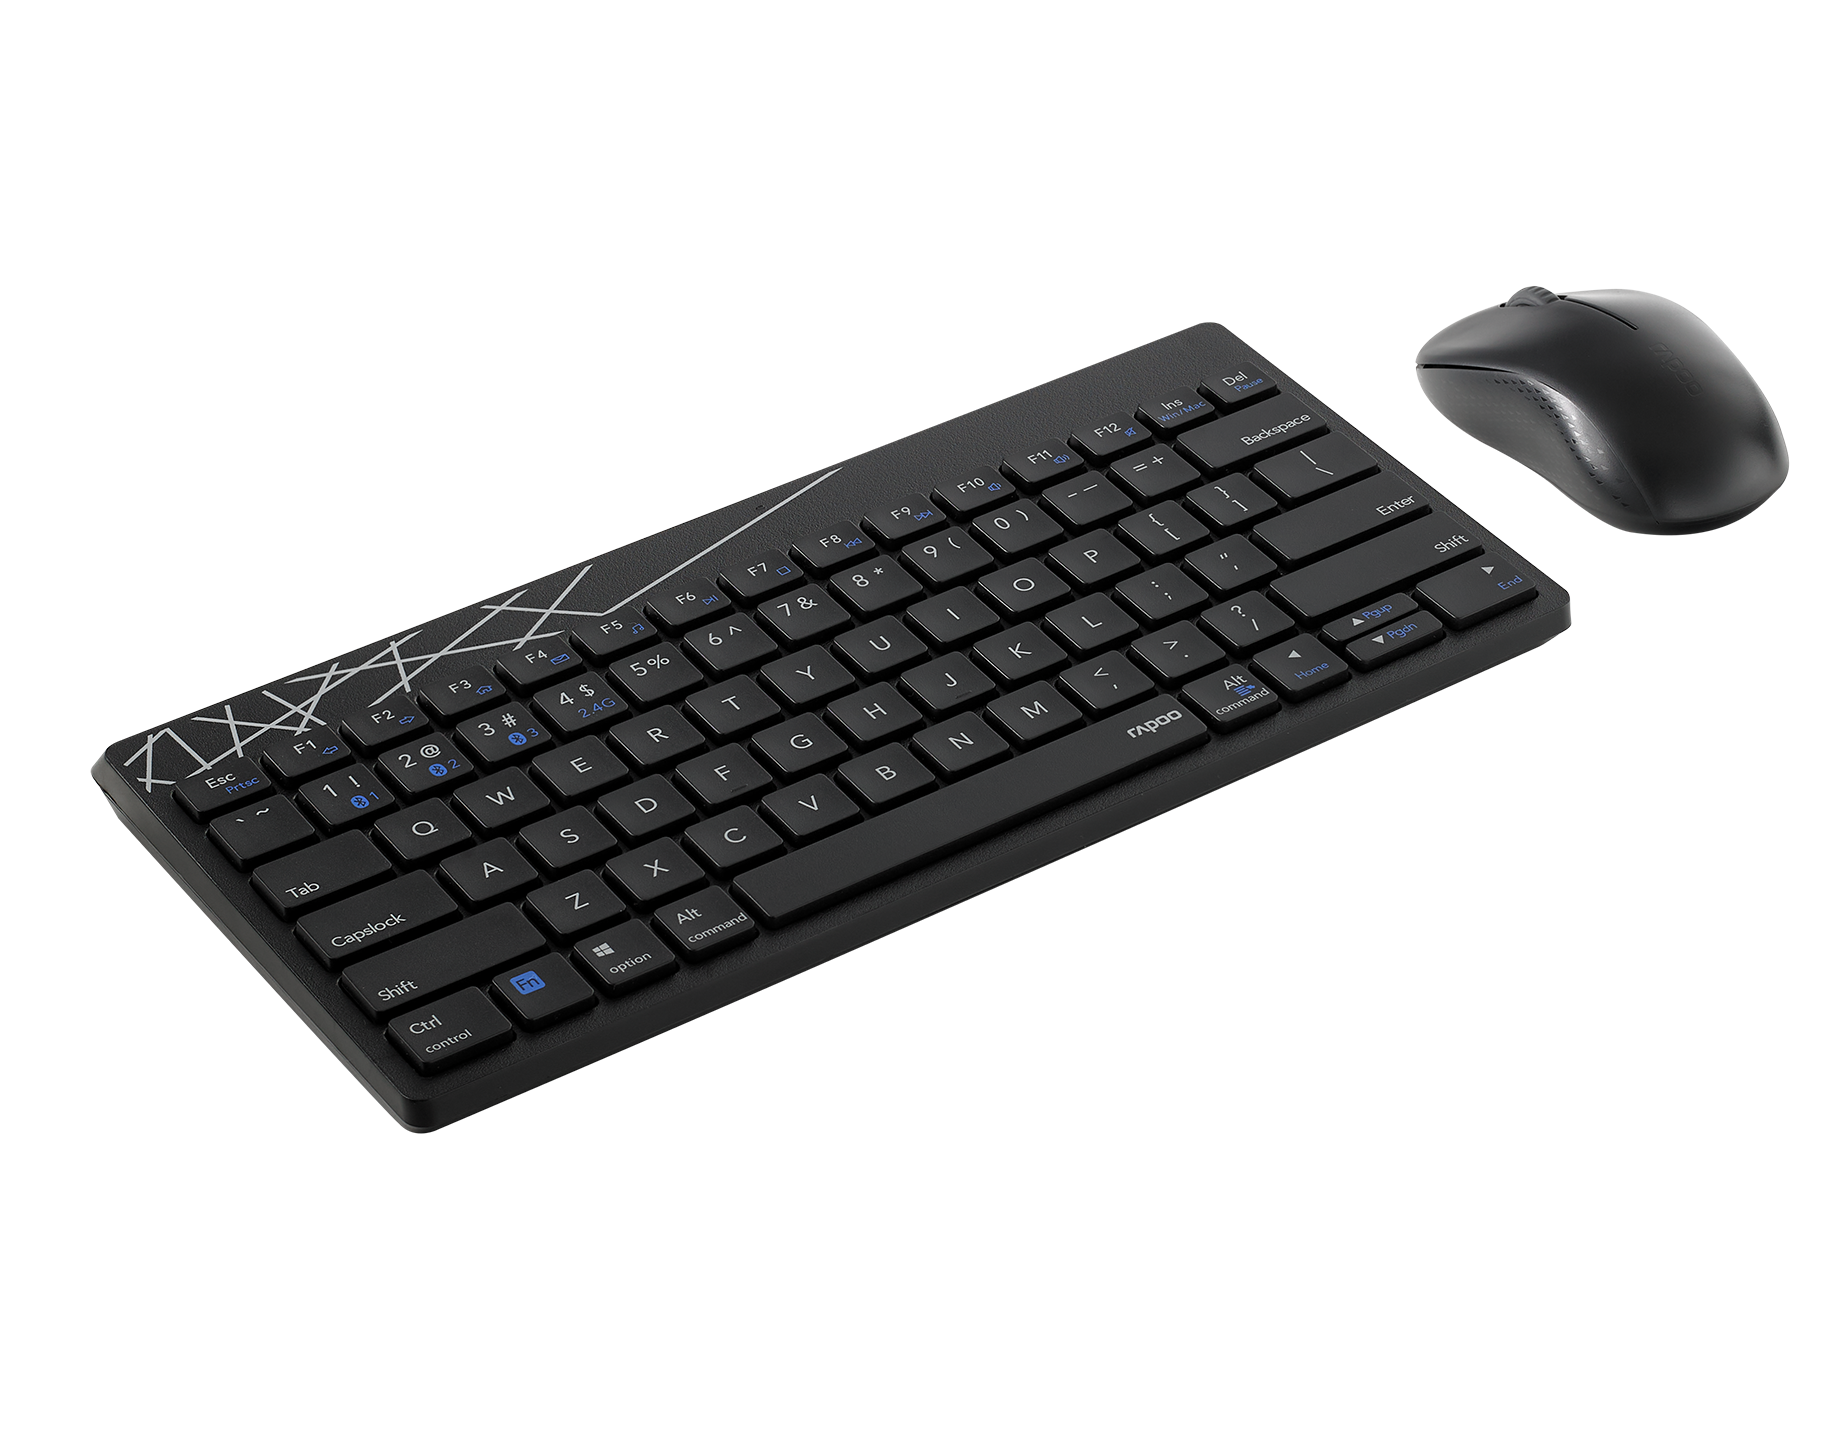 8210M Multi-mode Wireless Optical Mouse and Keyboard Combo